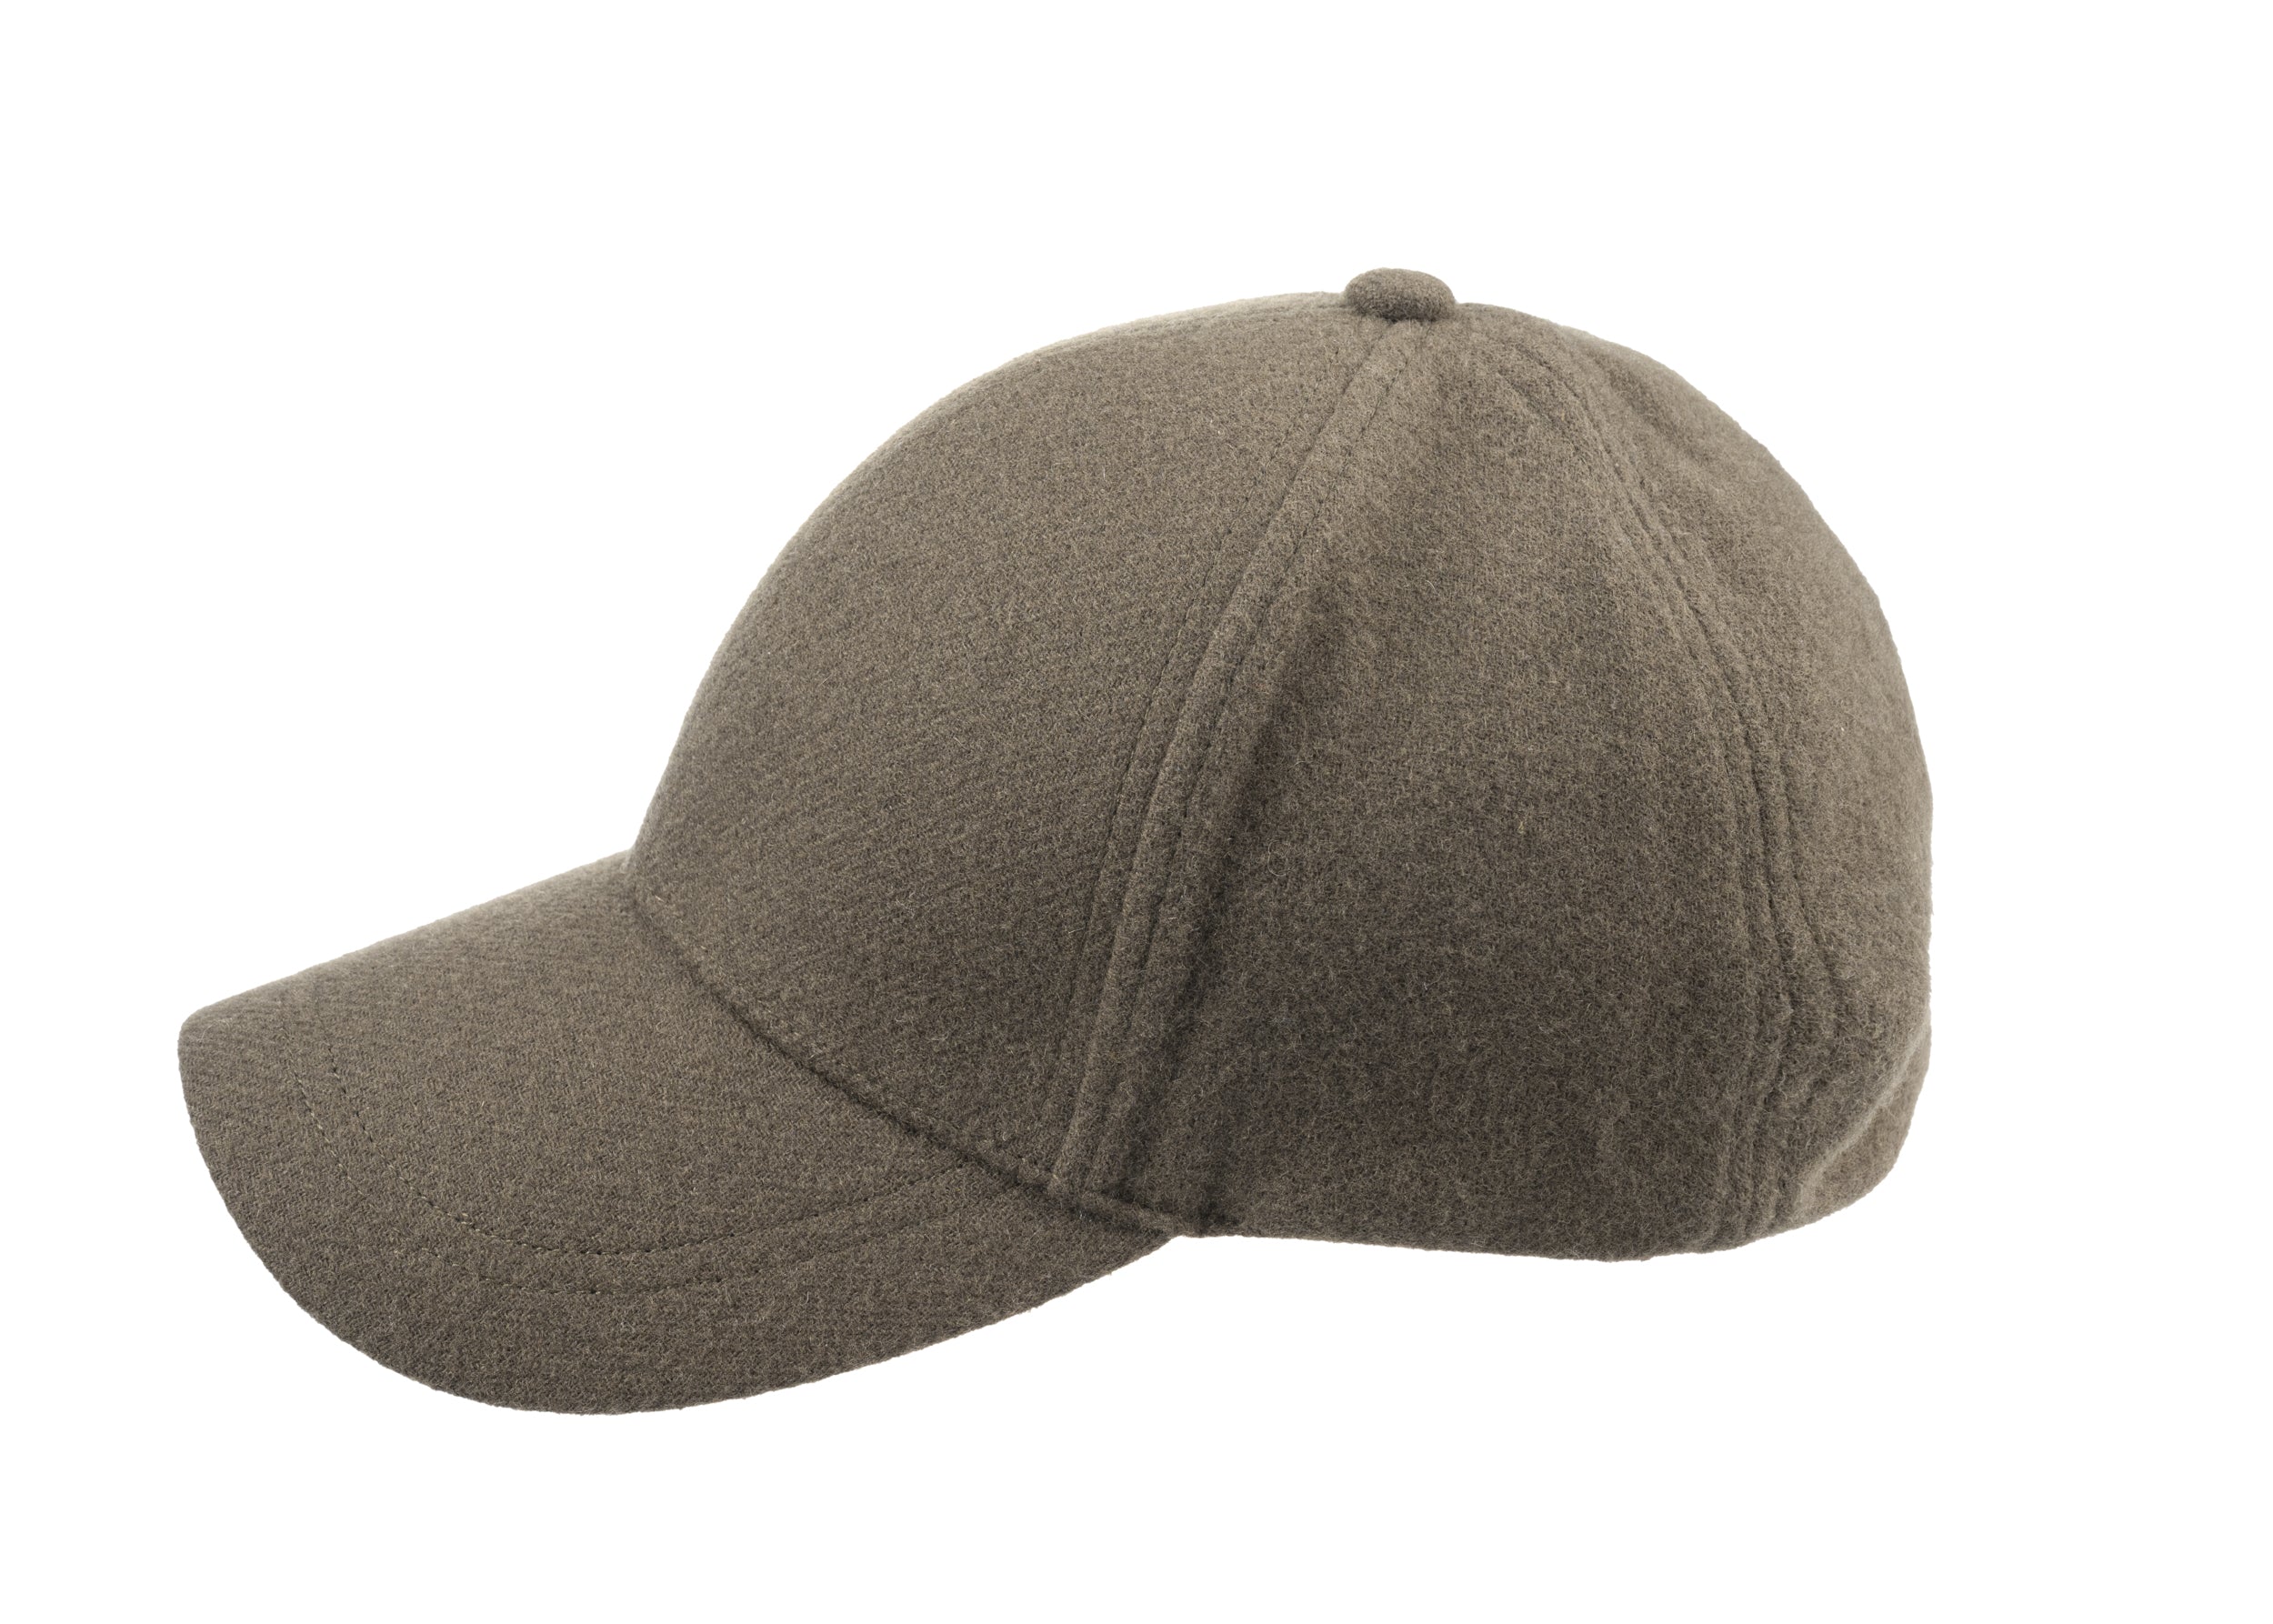 Josh baseball cap in cashmere/wool blend fabric in Khaki